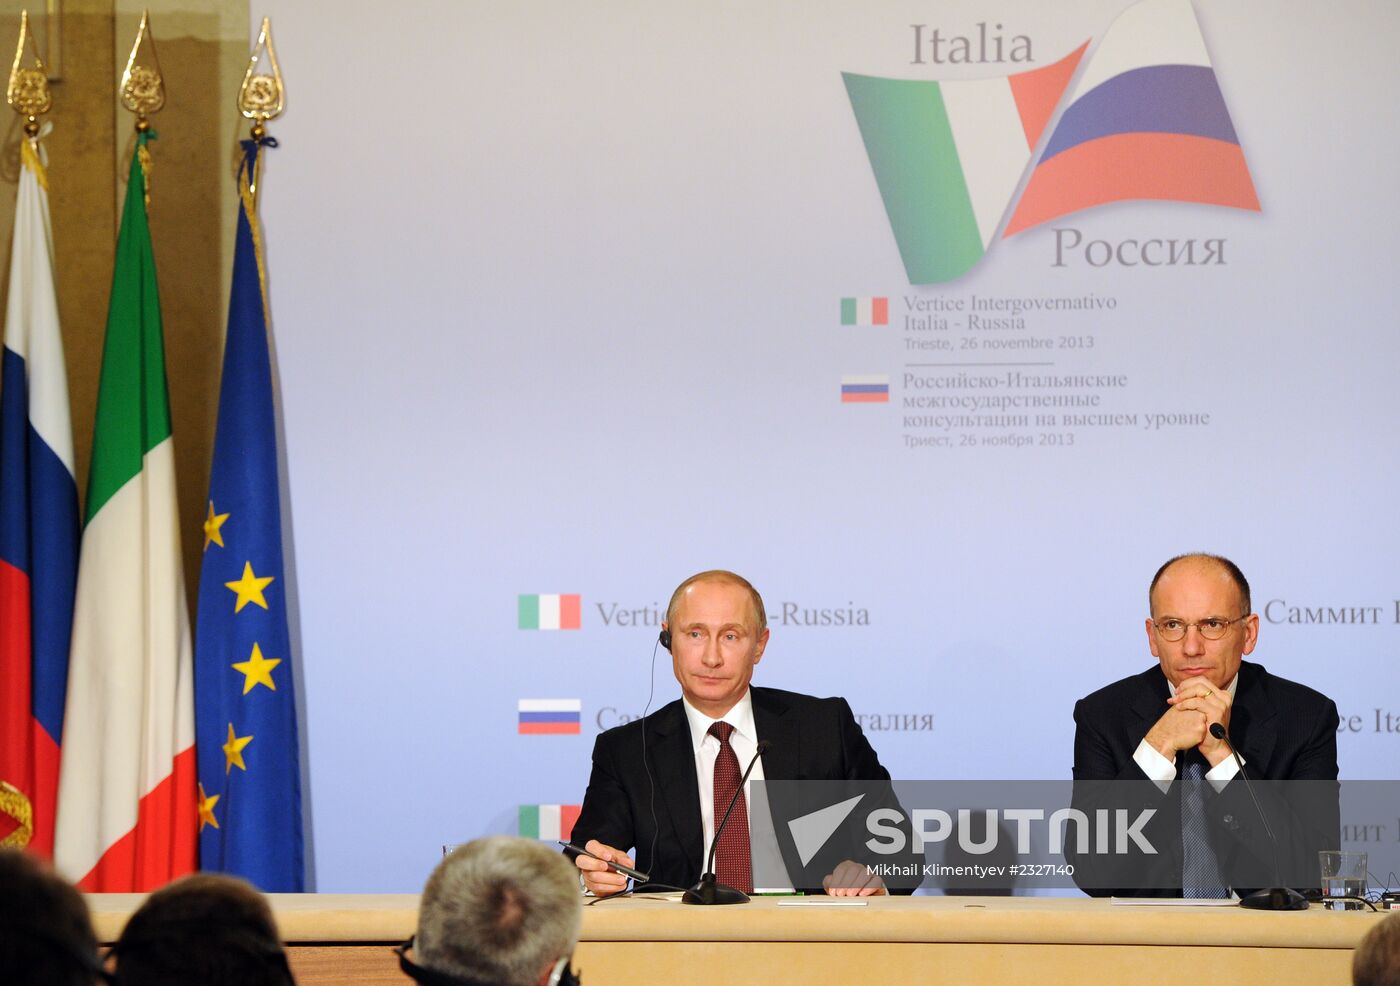 Vladimir Putin visits Italy